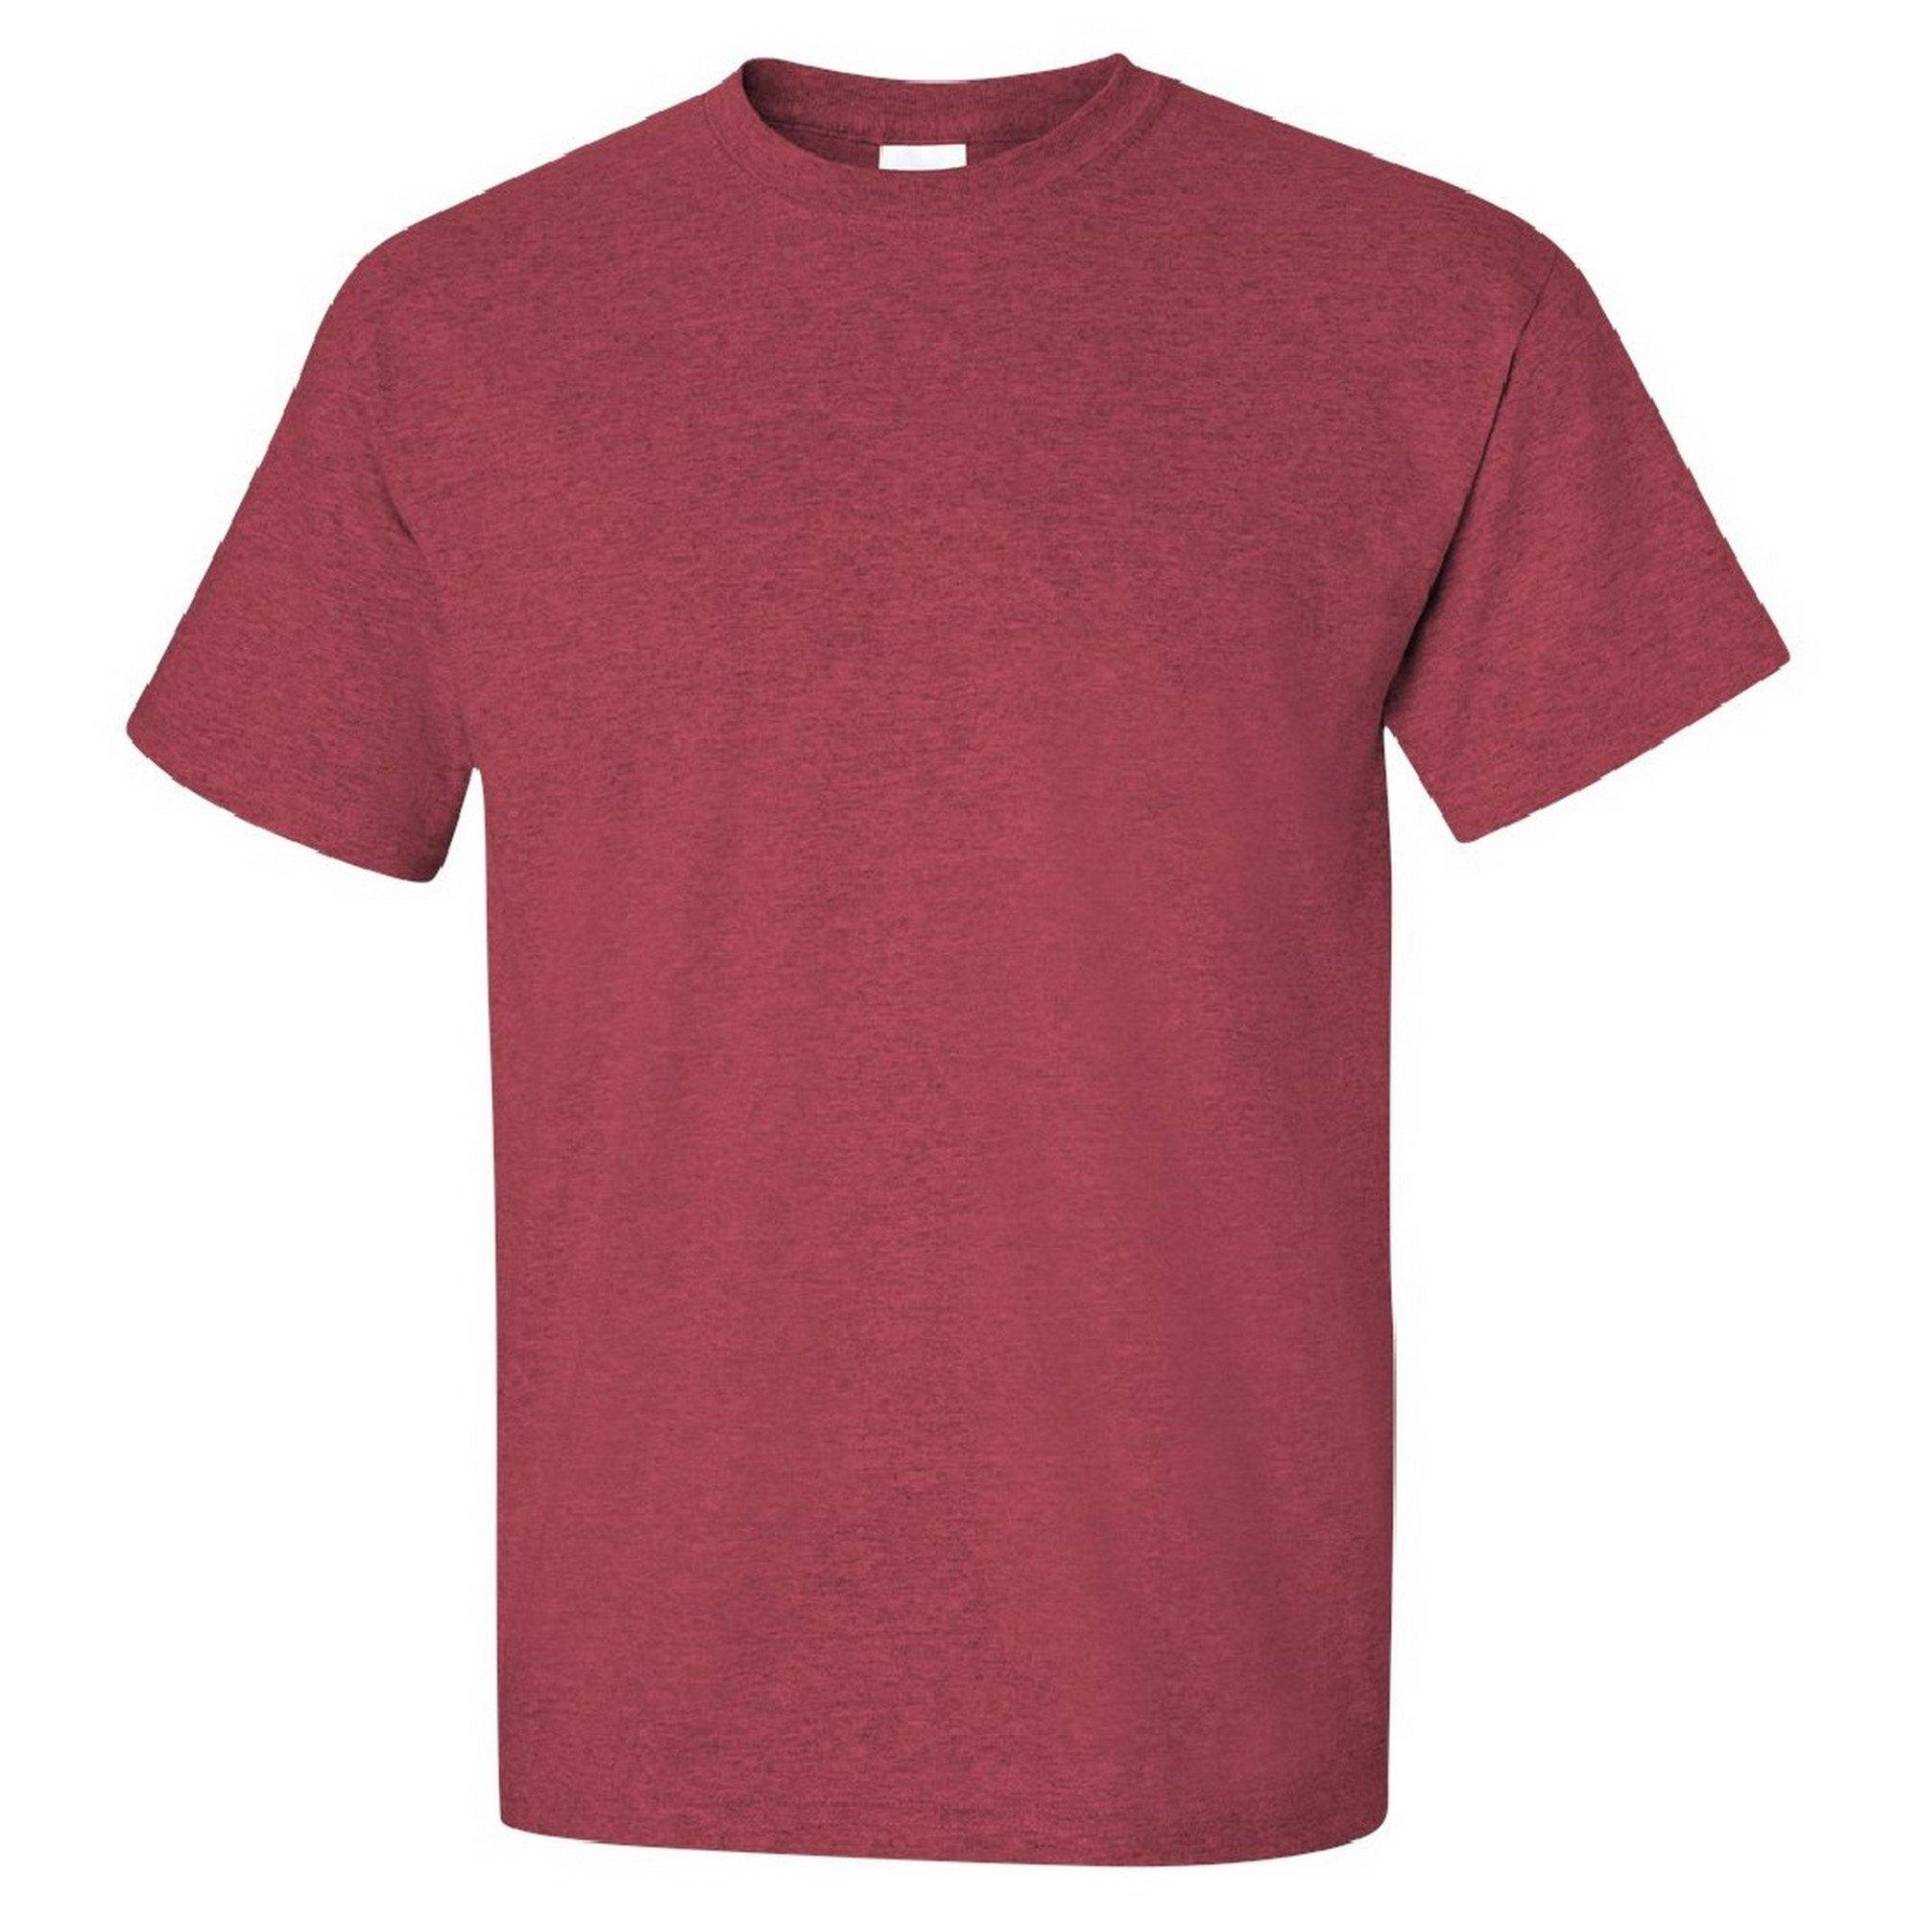 Ultra Tshirt Herren Rot Bunt L von Gildan